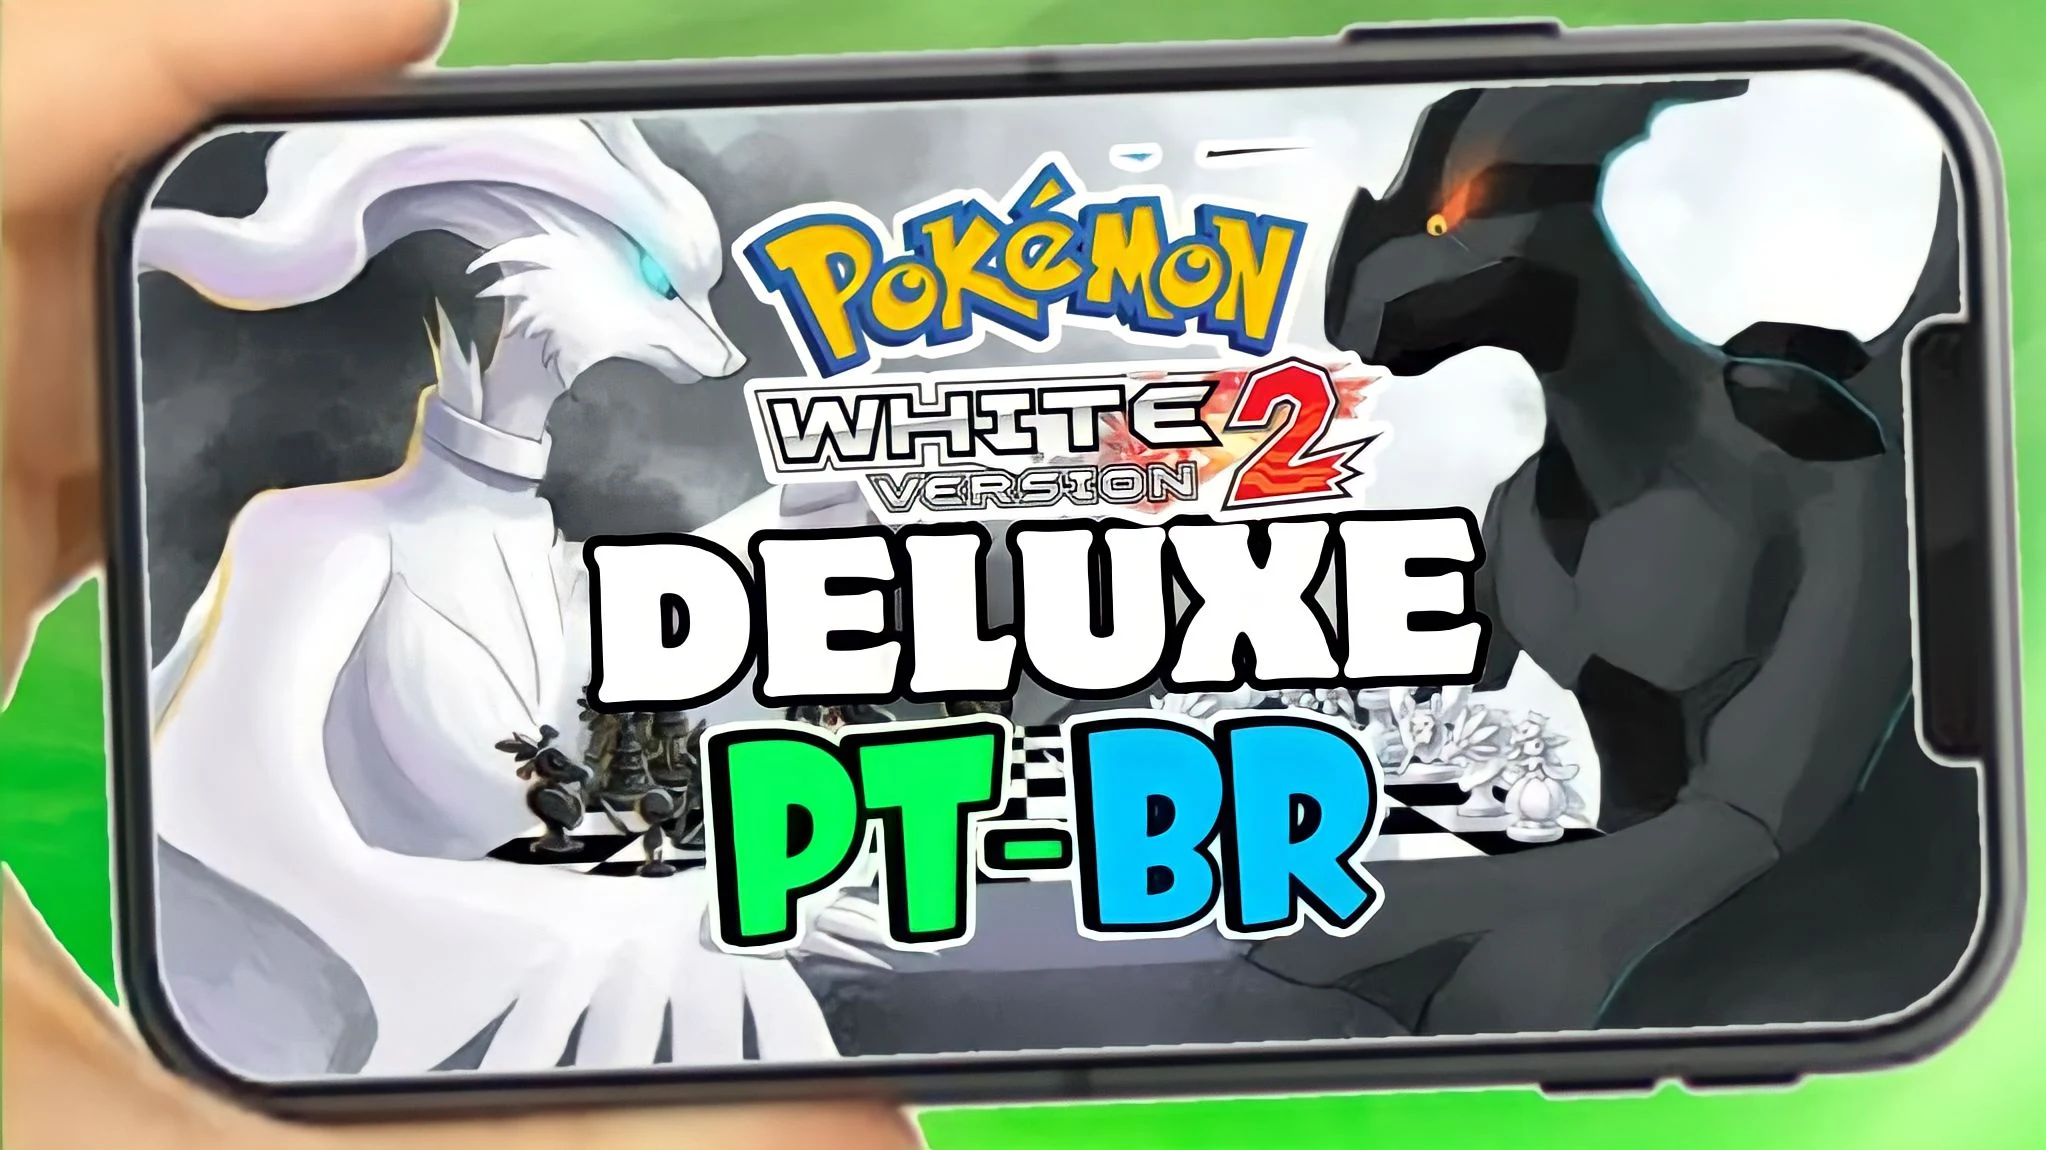 Pokémon White 2 Português PT-BR 